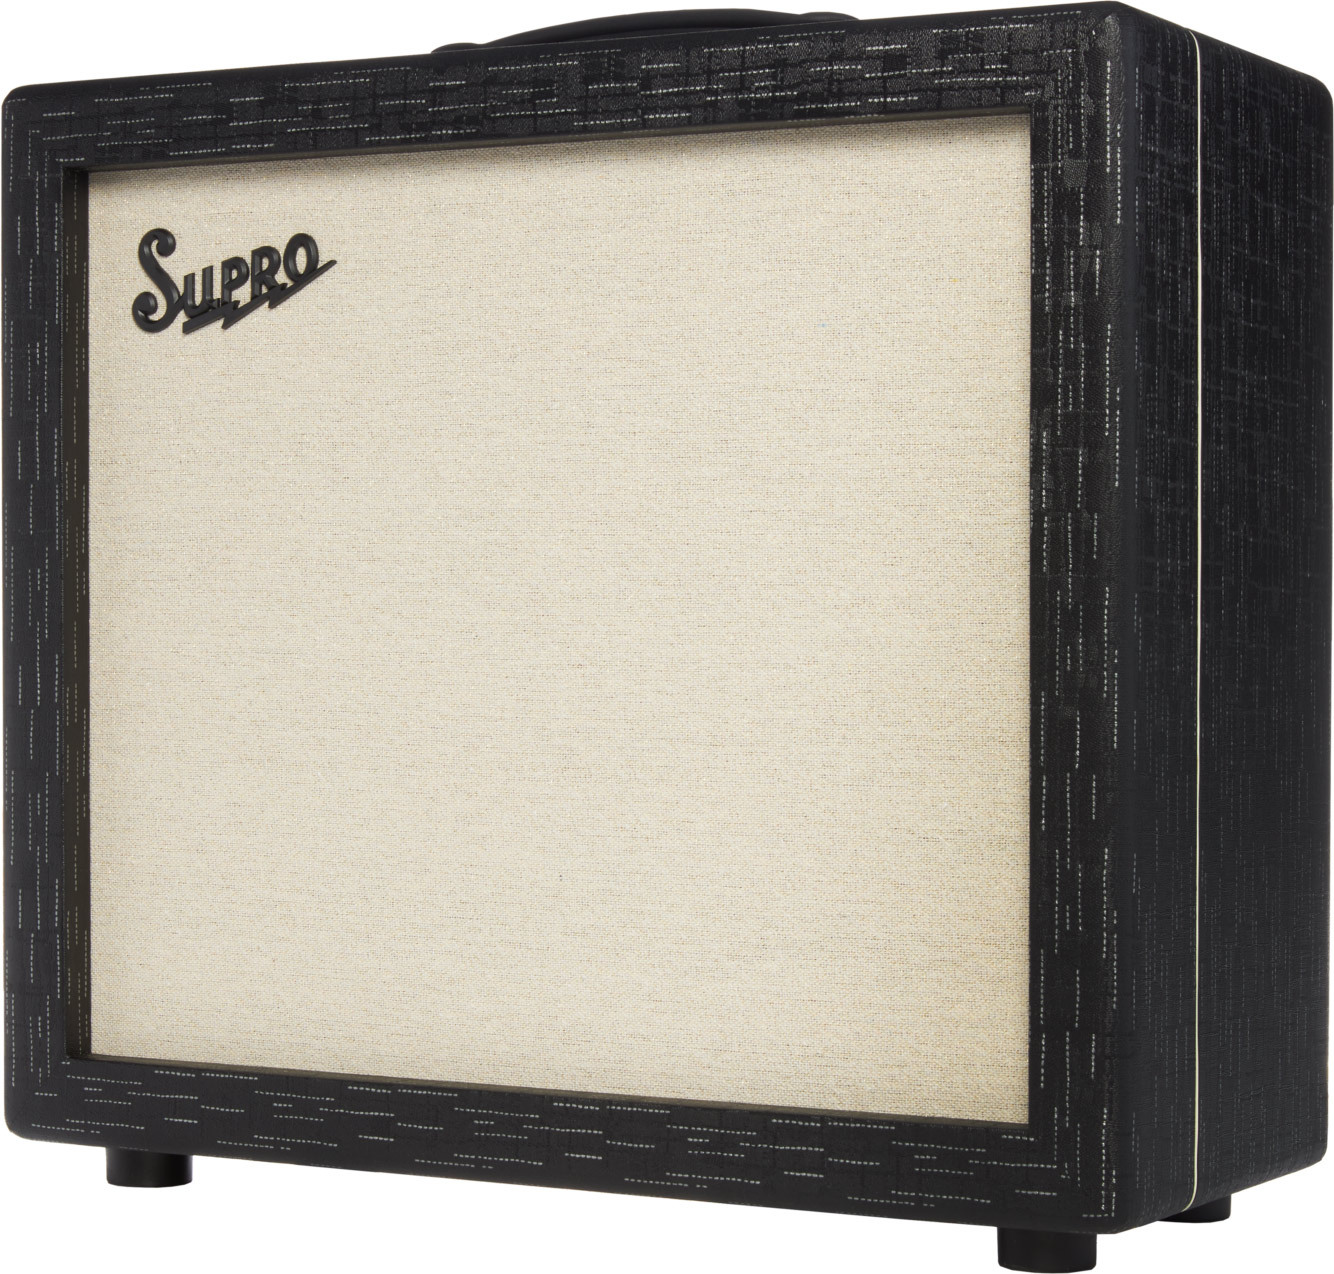 Supro Royale 1x12 Guitar Cab 1732 1x12 75w 8-ohms Black Scandia - Cabina amplificador para guitarra eléctrica - Main picture